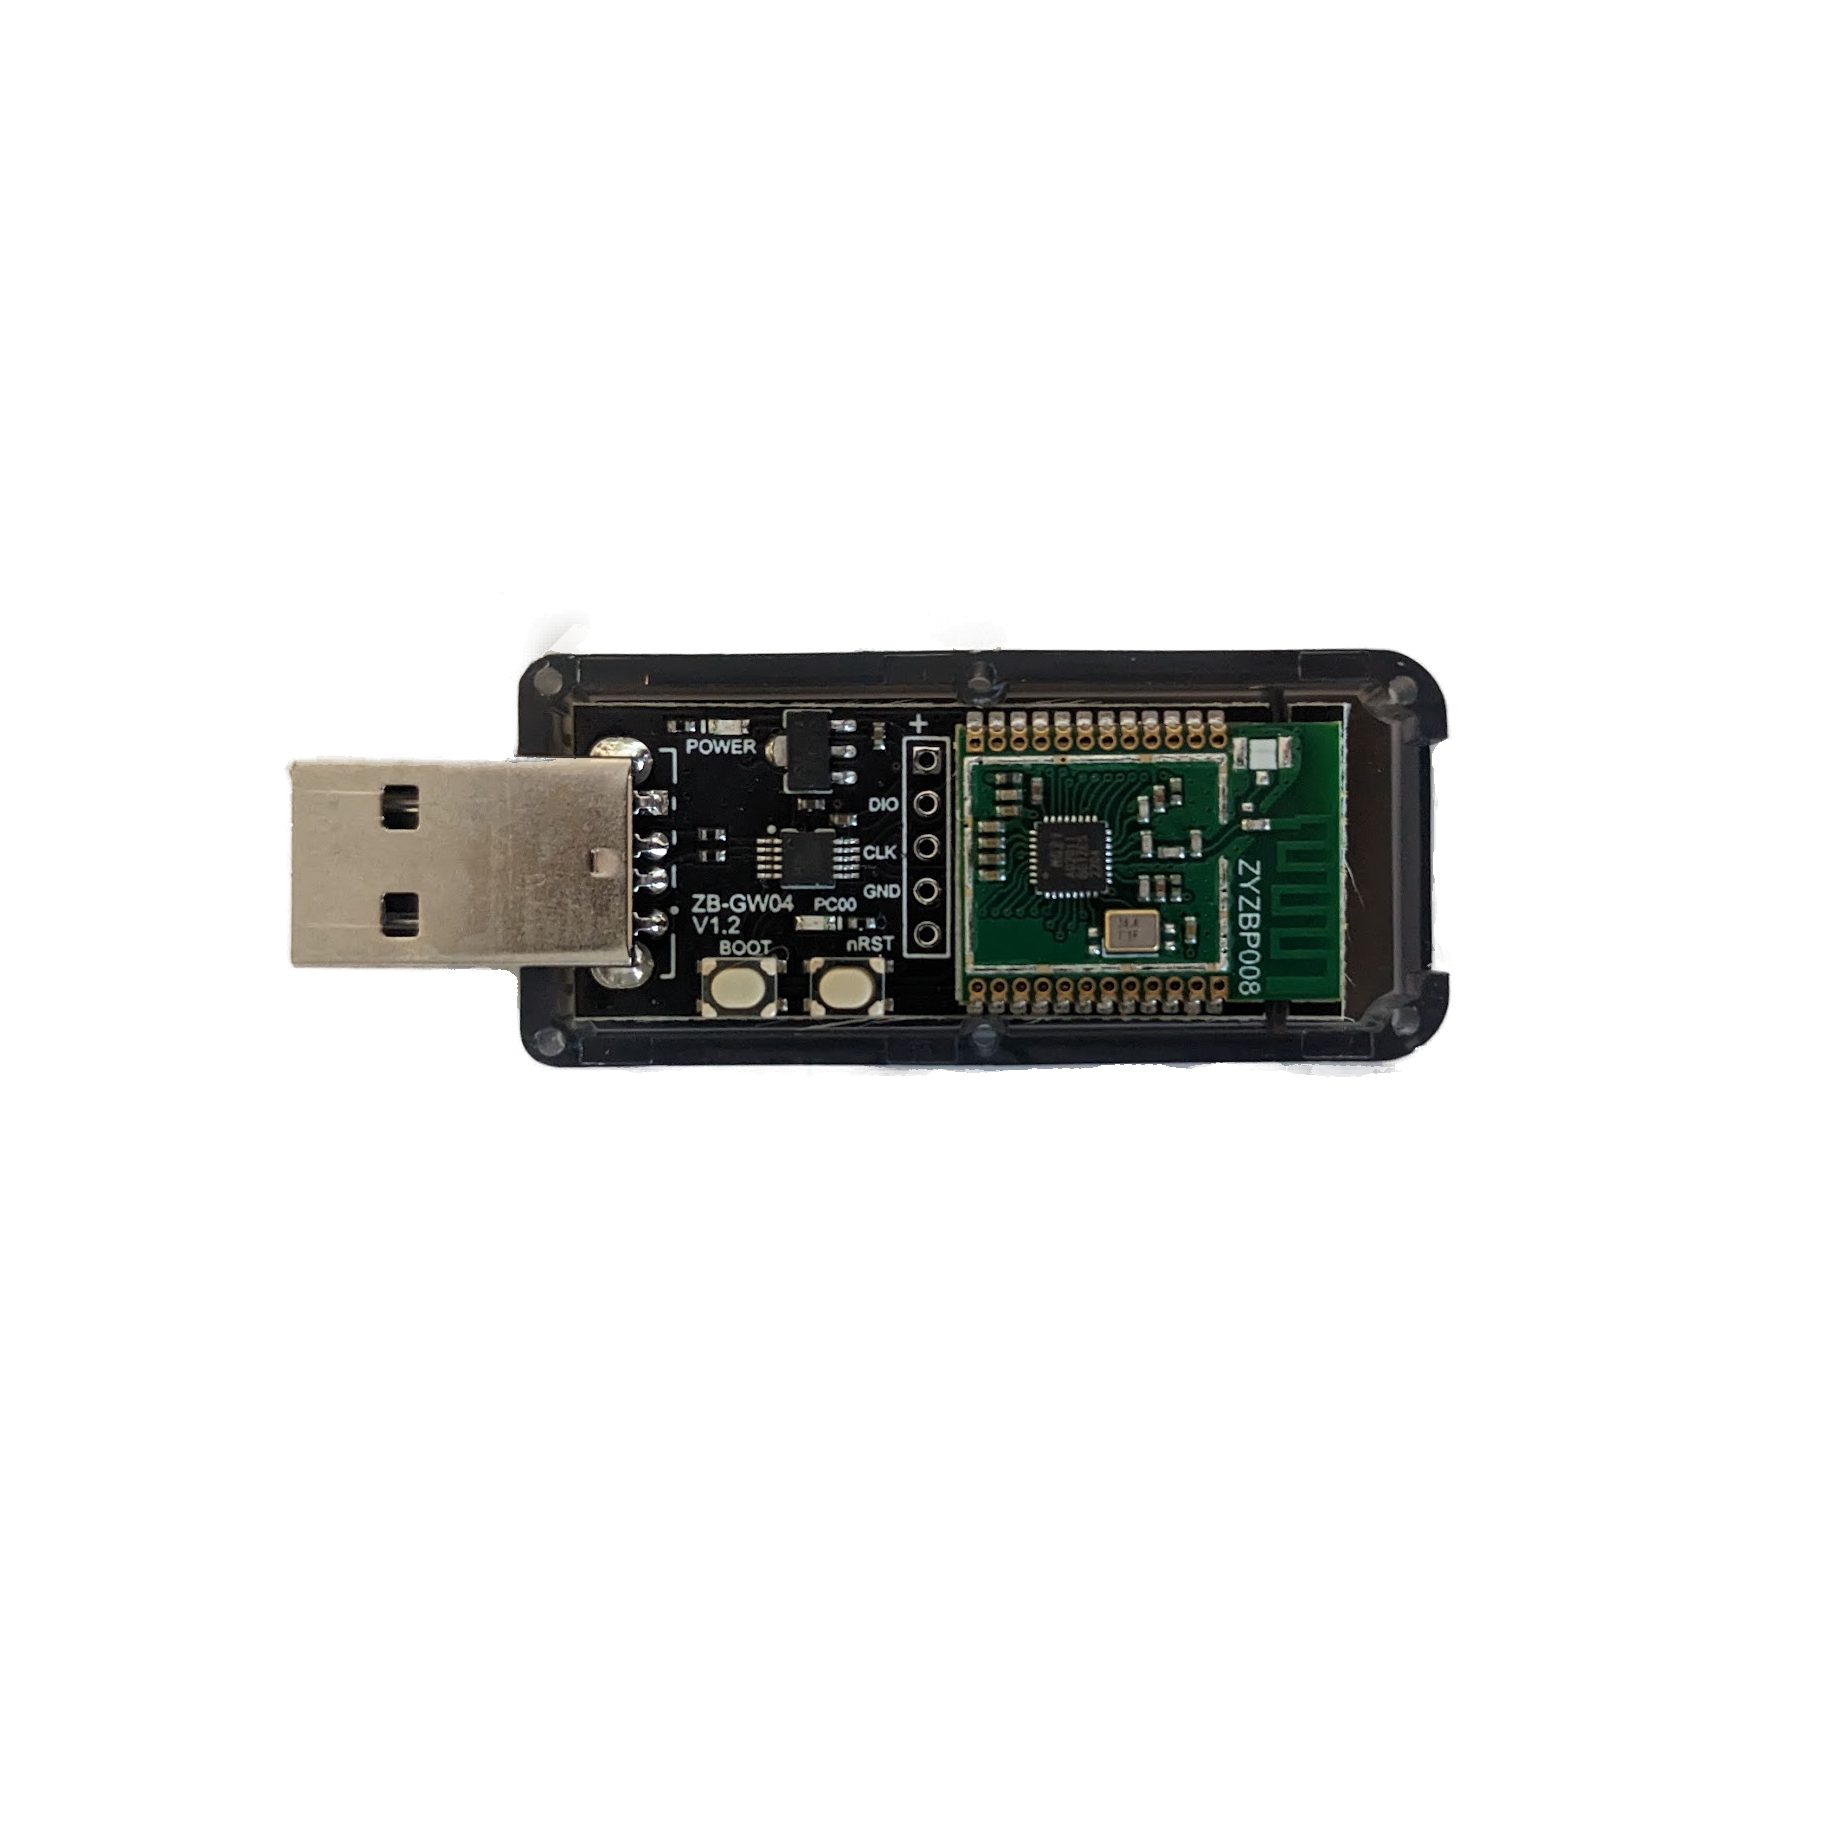 v1.2 - Zigbee 3.0 Universal Gateway USB Dongle